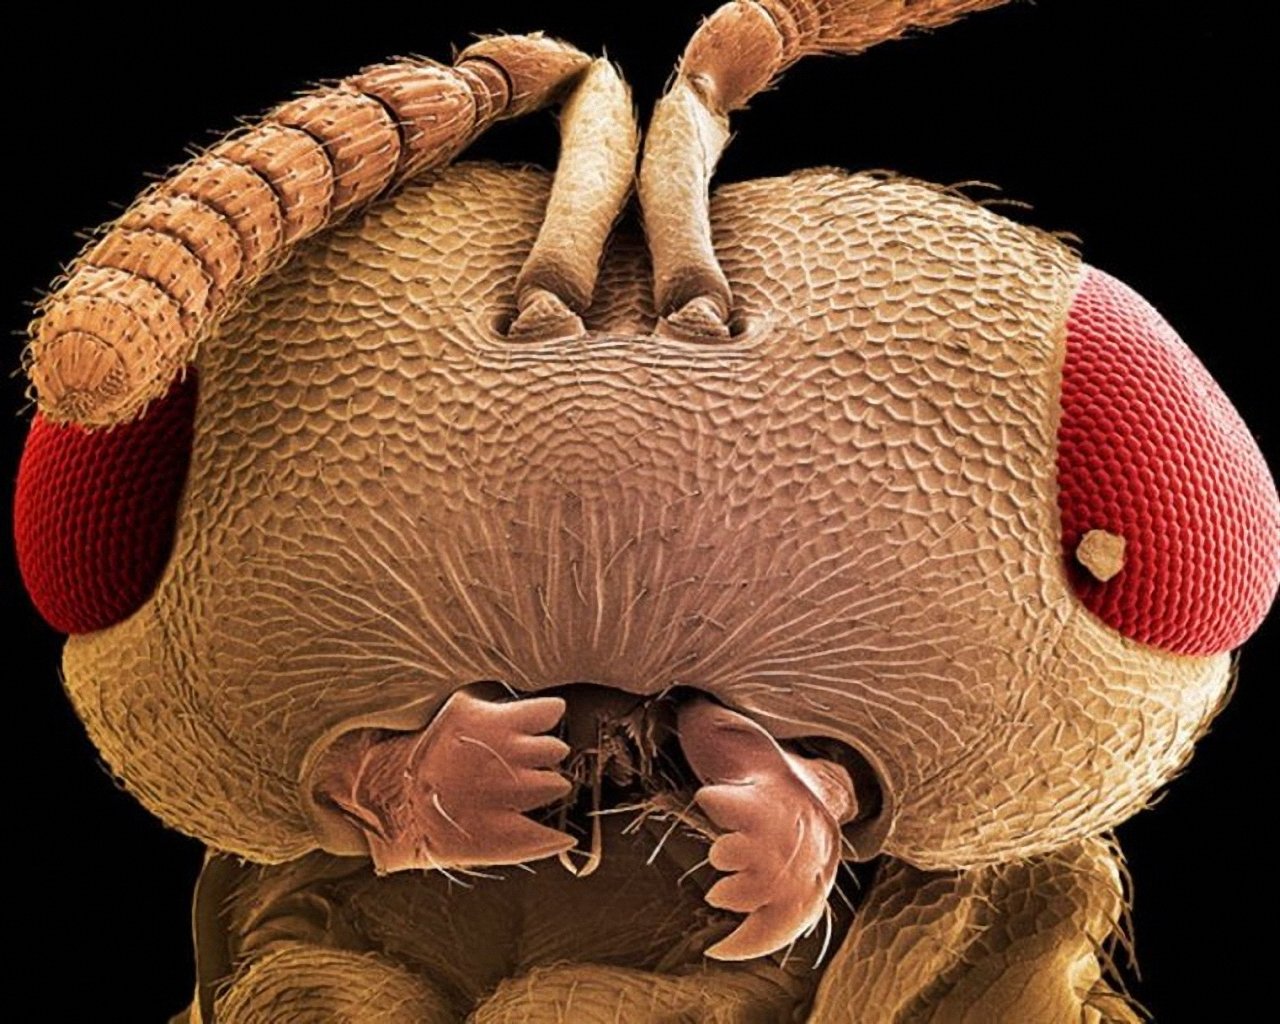 Мошка под микроскопом фото. Мошка гнус под микроскопом. Микромир насекомые под микроскопом. Зубы мошкары под микроскопом. Насекомые над микроскопом.